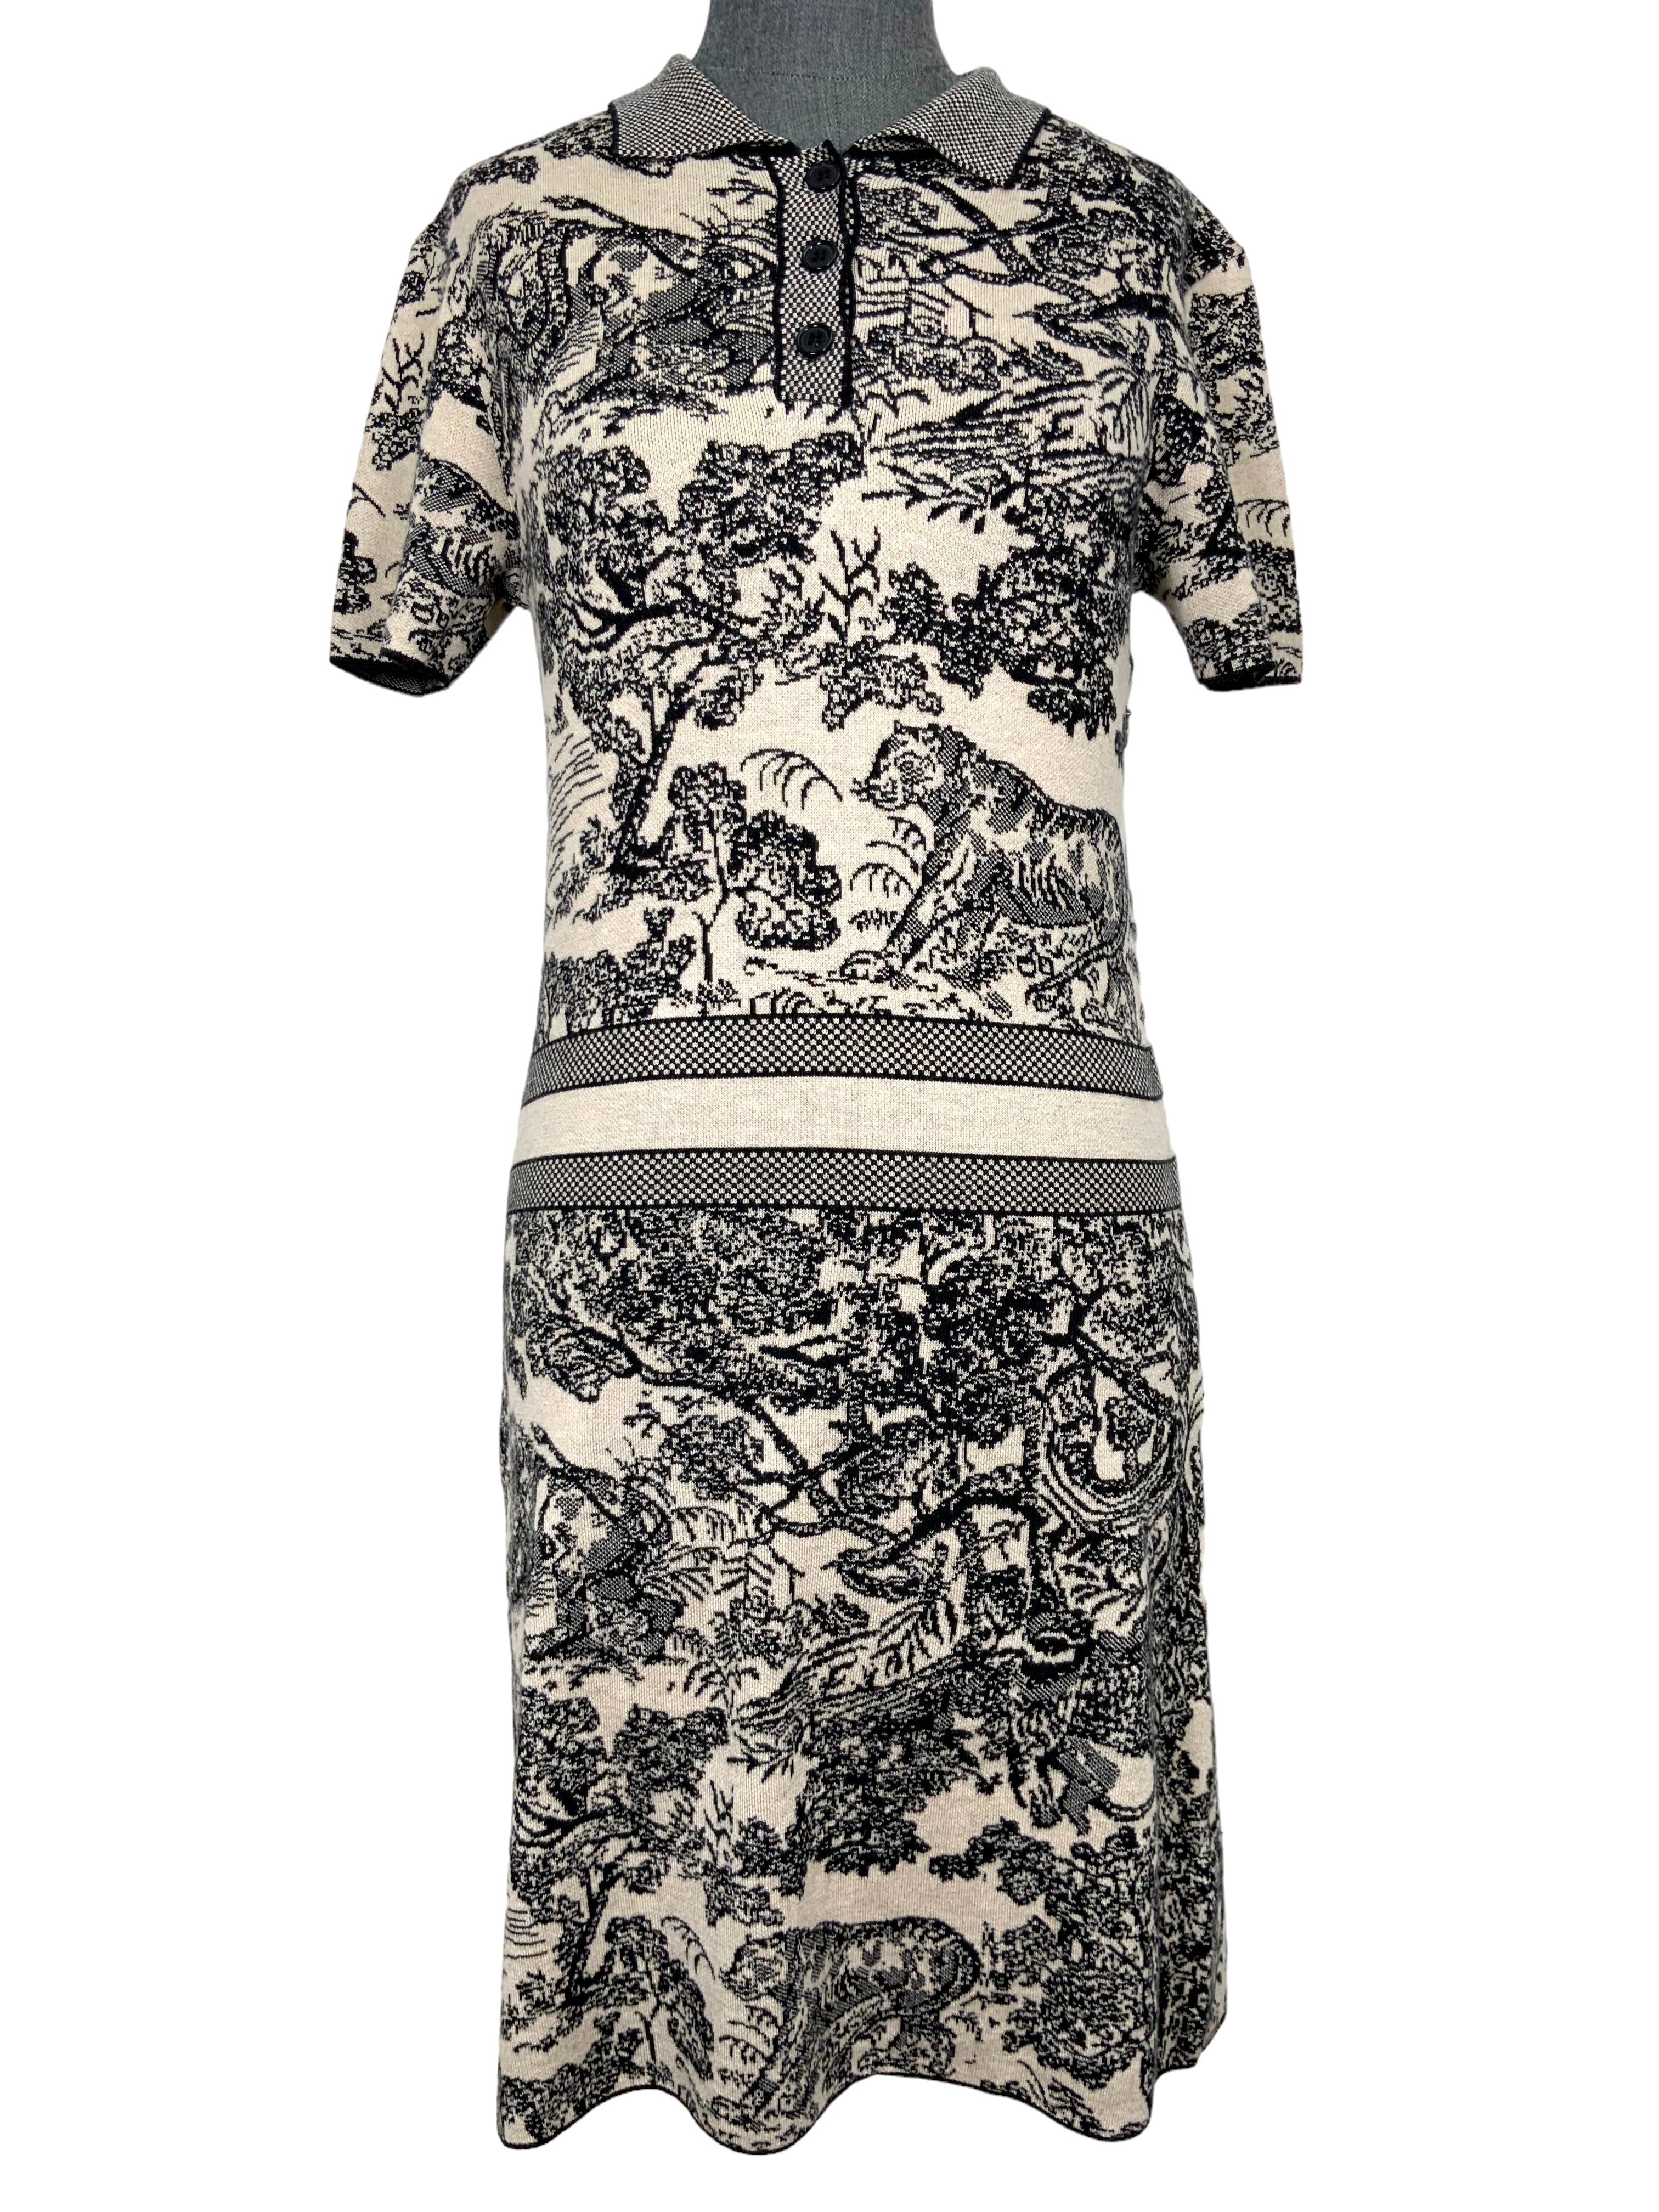 Dior Toile de Jouy Jungle Printed Dress Size M